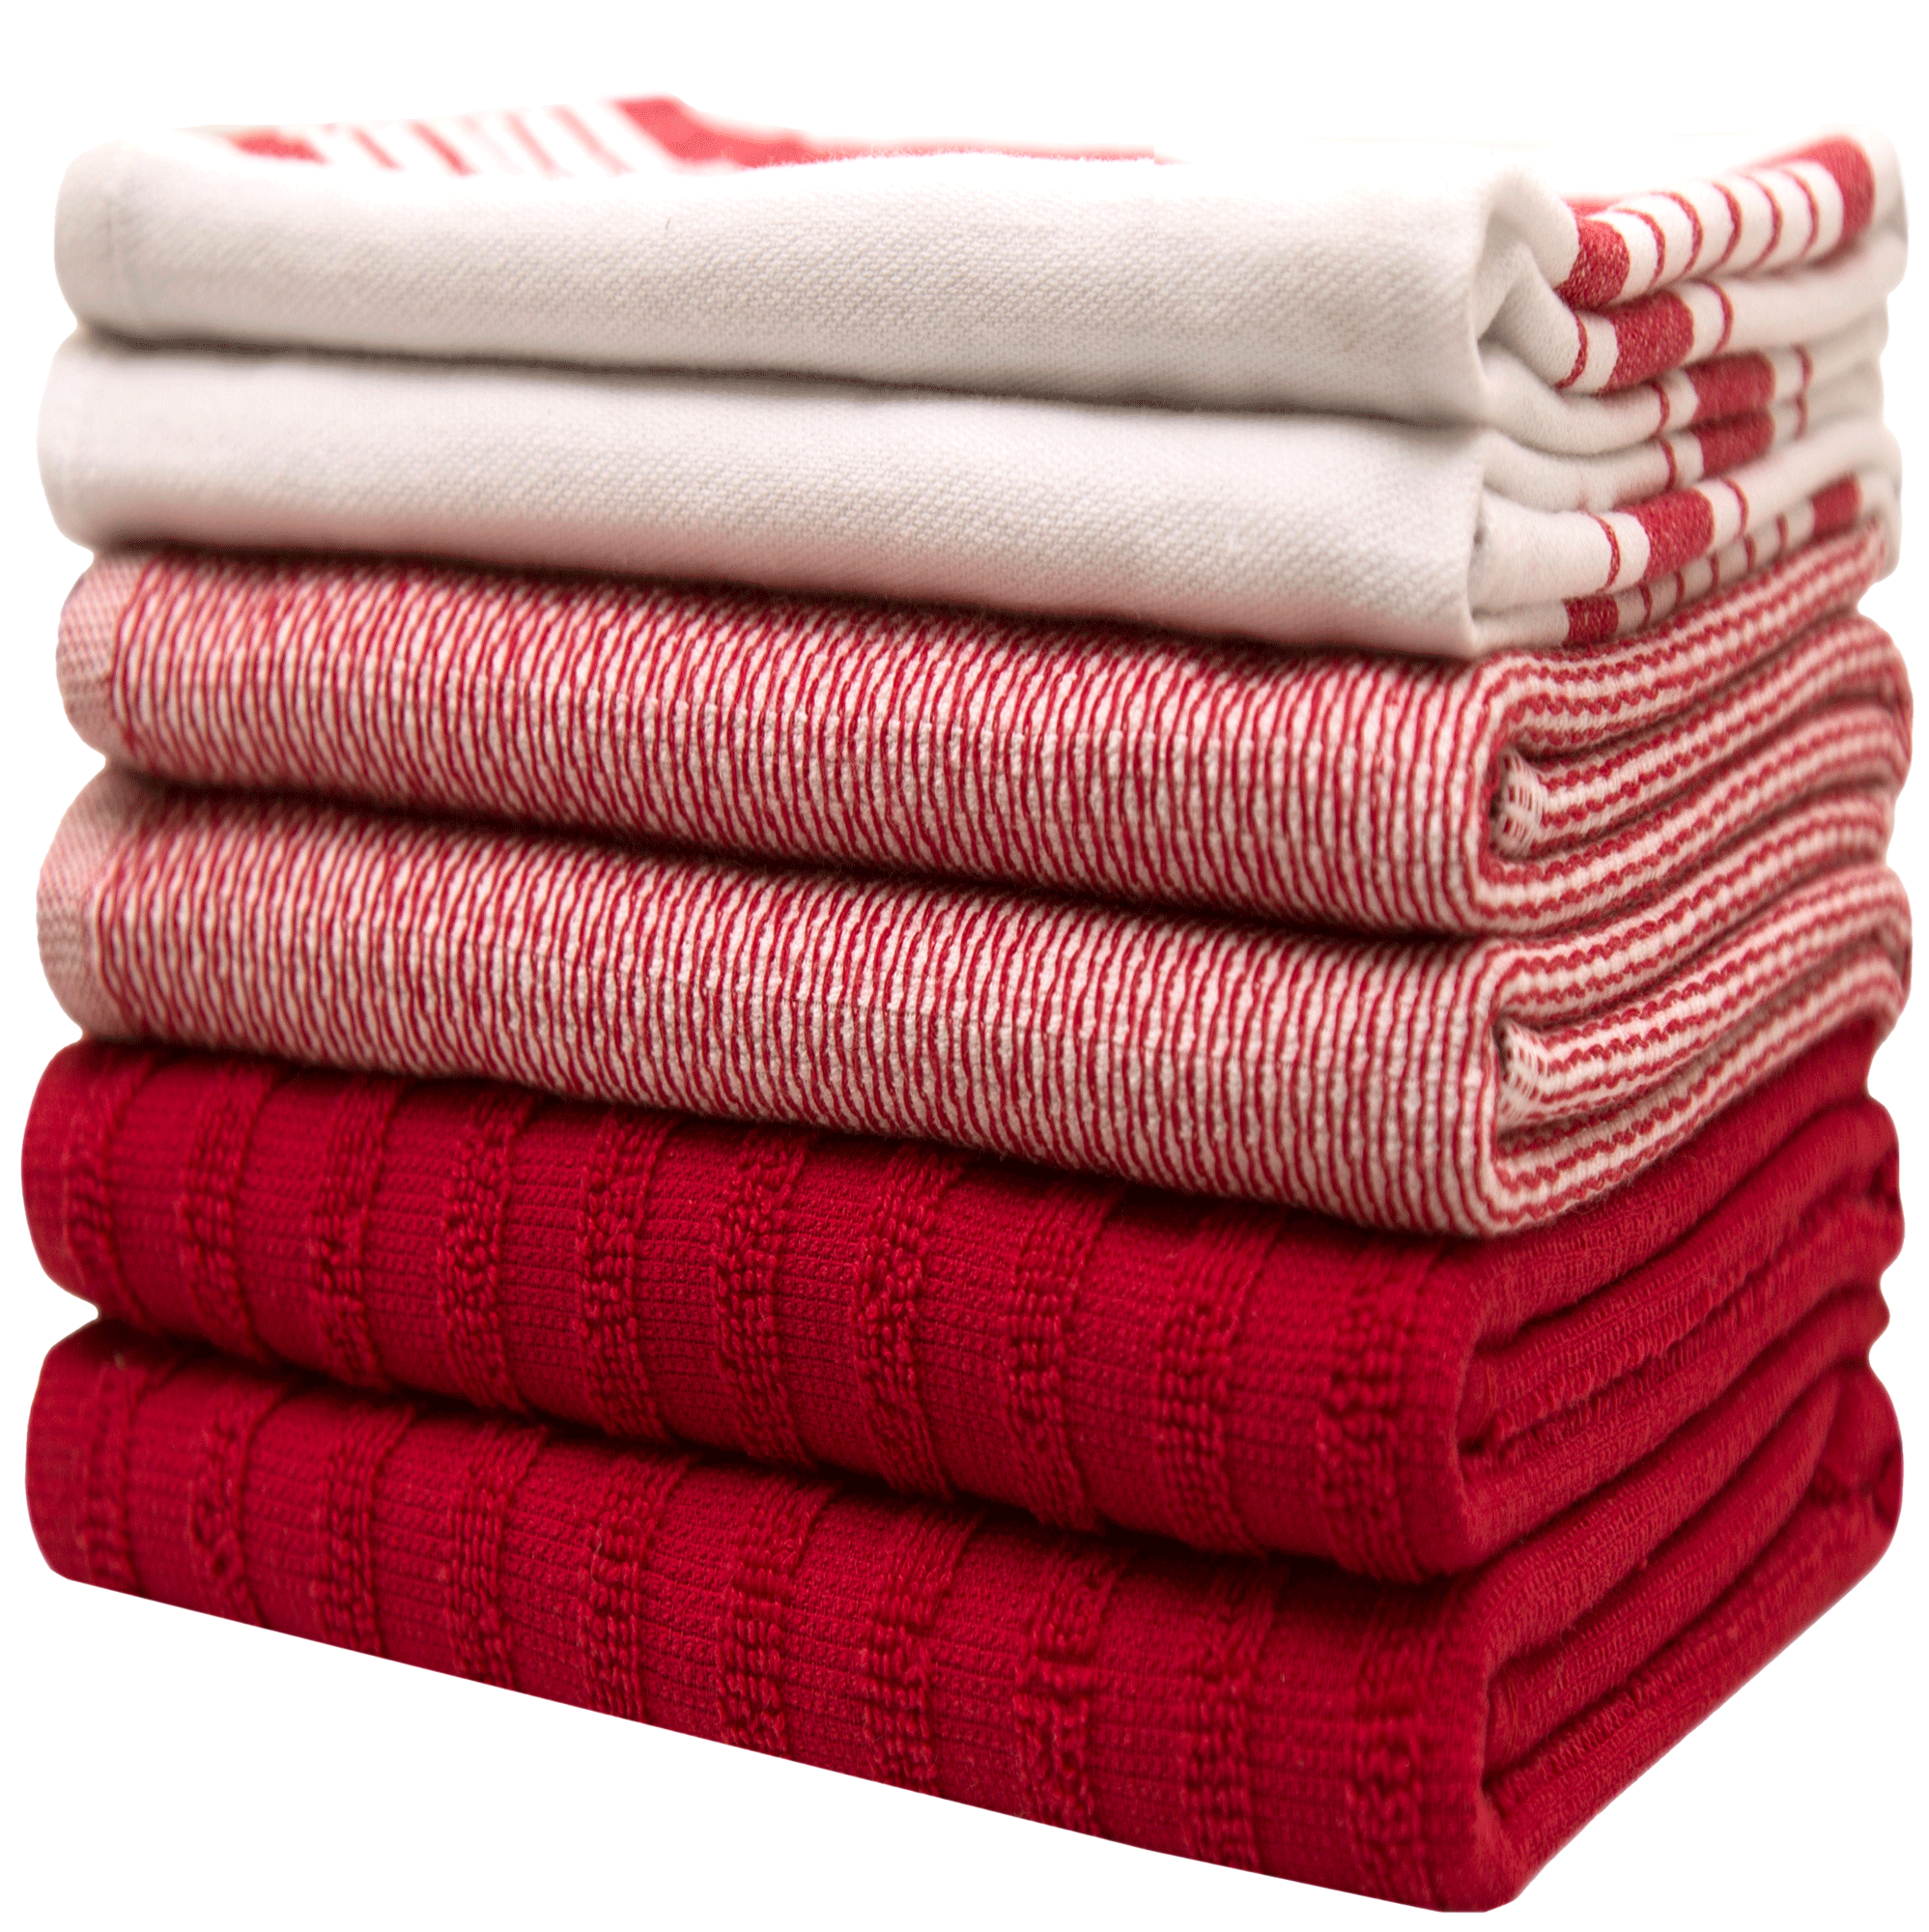  Bumble Towels: Kitchen towels